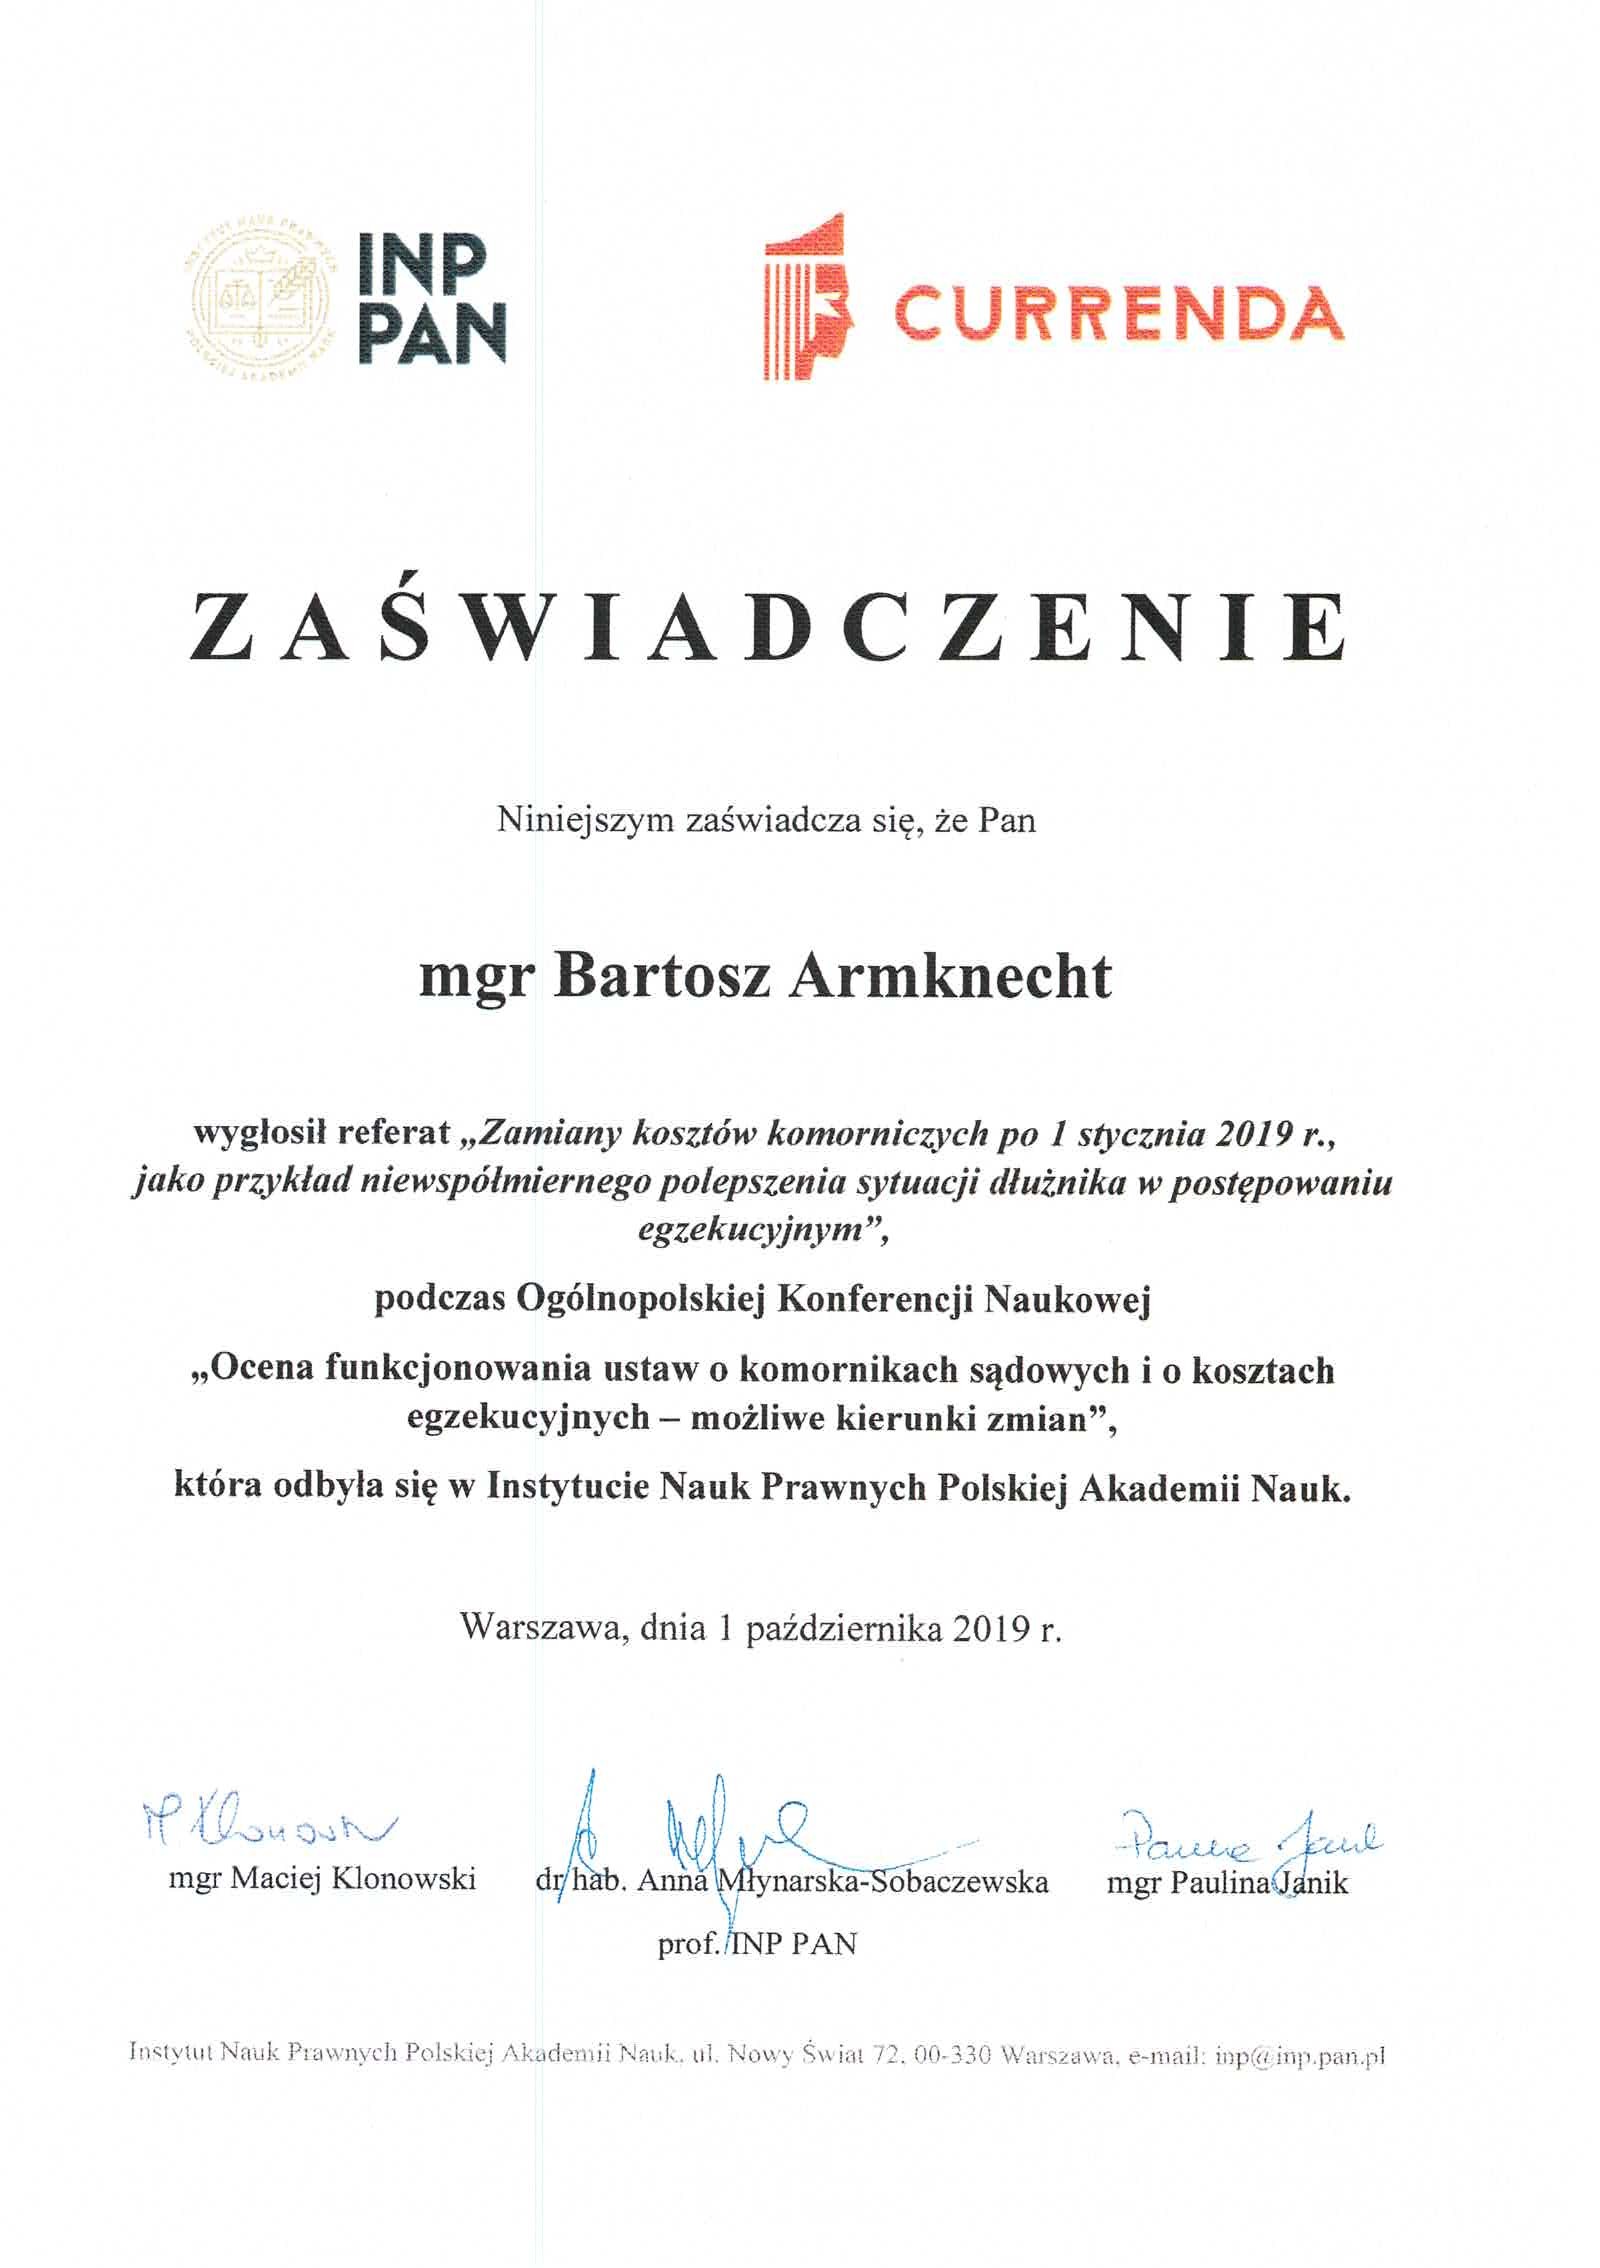 Kancelaria Prawna ADVISER Armknecht & Partners attorneys-at-law | Windykacja / Debt collection